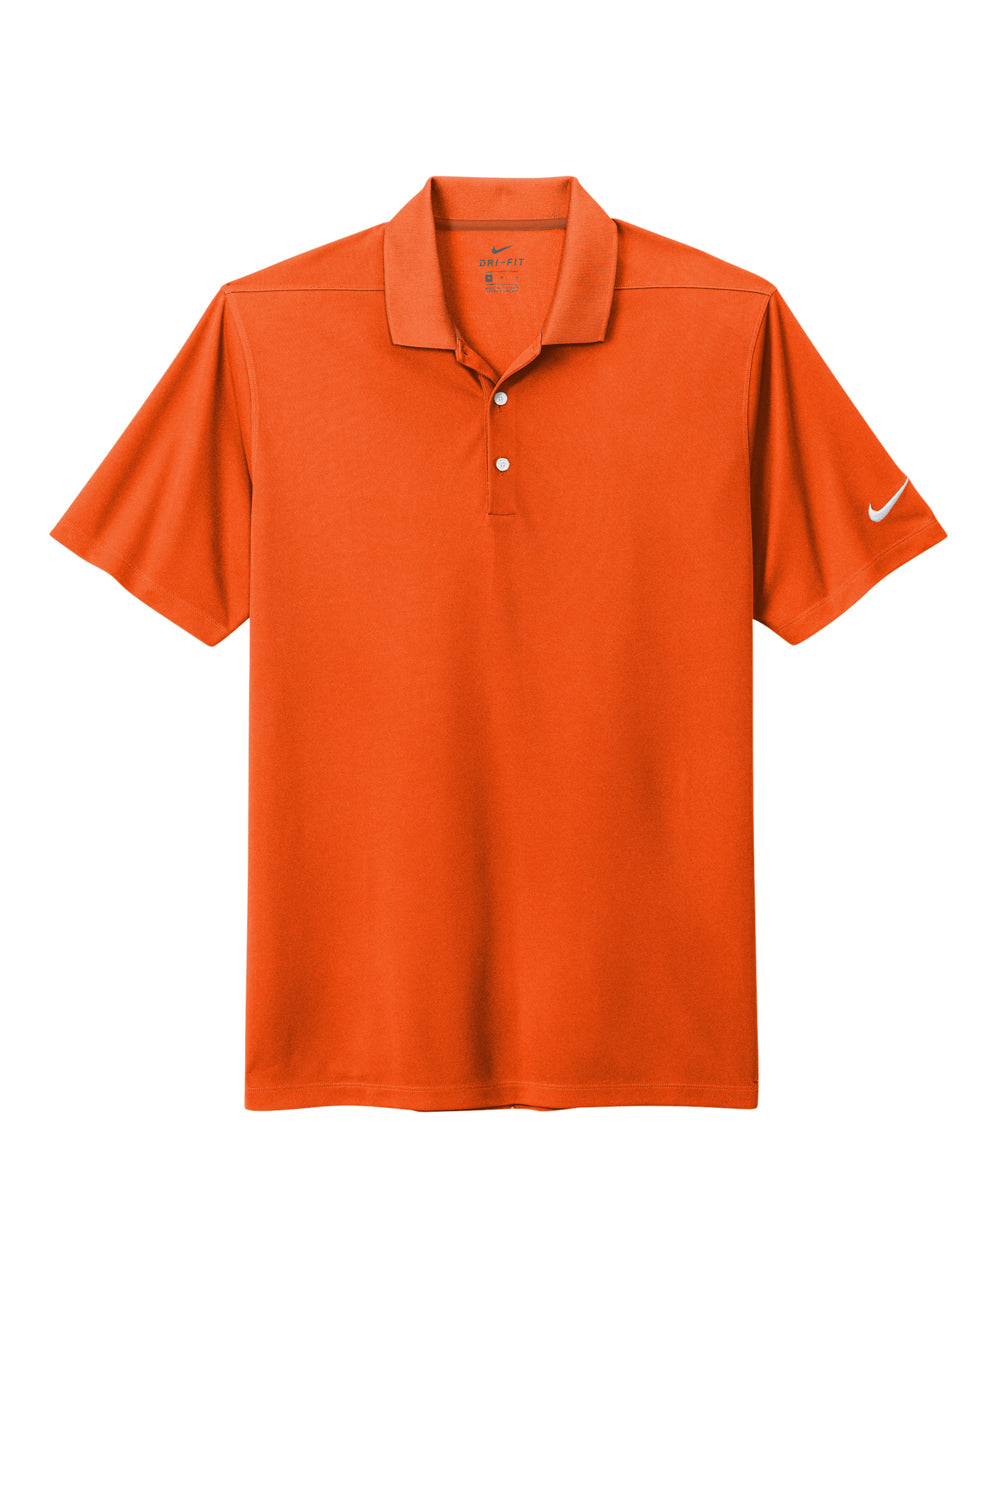 Nike NKDC1963 Mens Dri-Fit Moisture Wicking Micro Pique 2.0 Short Sleeve Polo Shirt Brilliant Orange Flat Front